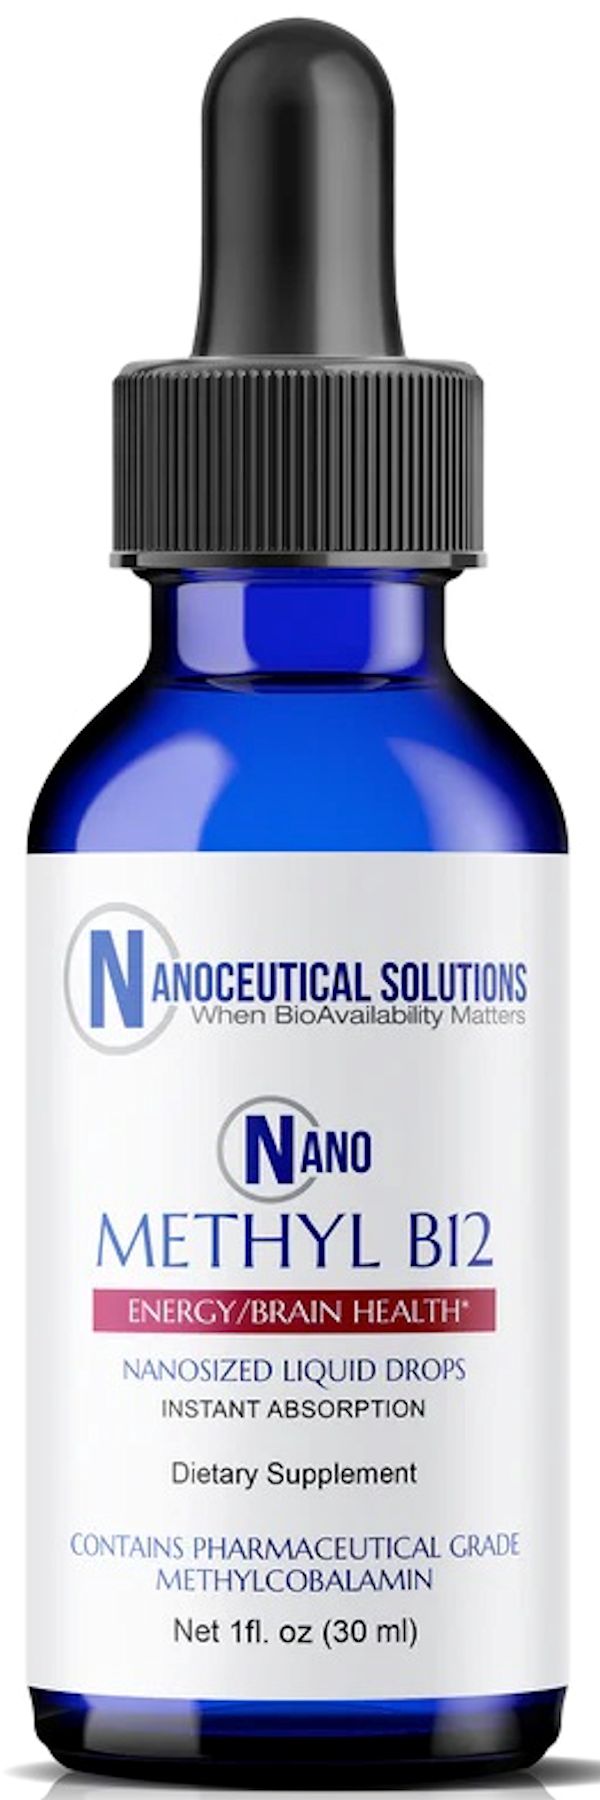 Nanoceutical Solutions Nano Methyl B12 sublingual liquid drops